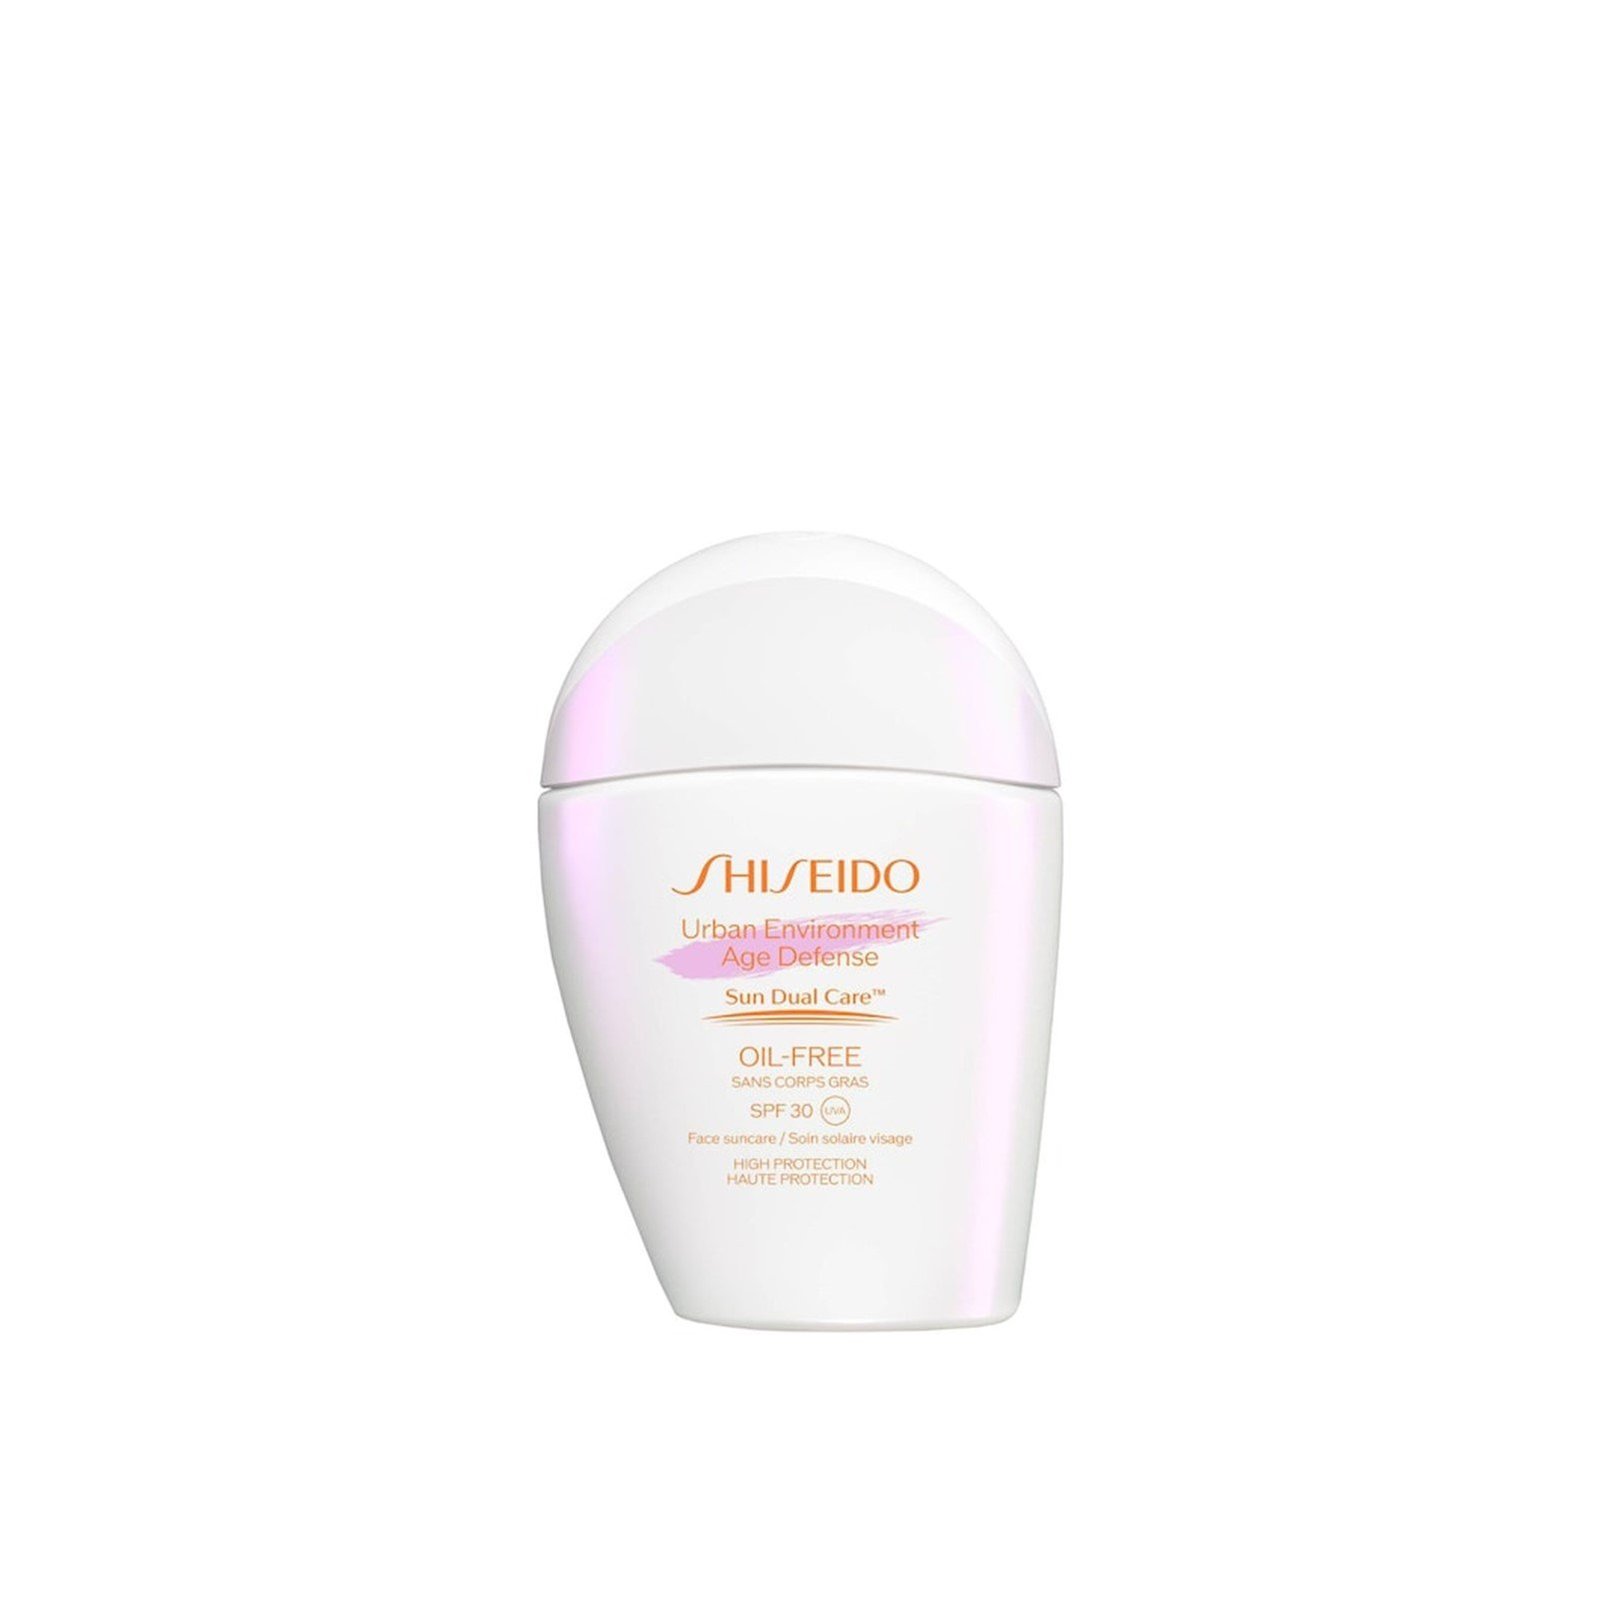 Shiseido Urban Environment Age Defense Oil-Free Face Suncare SPF30 30ml